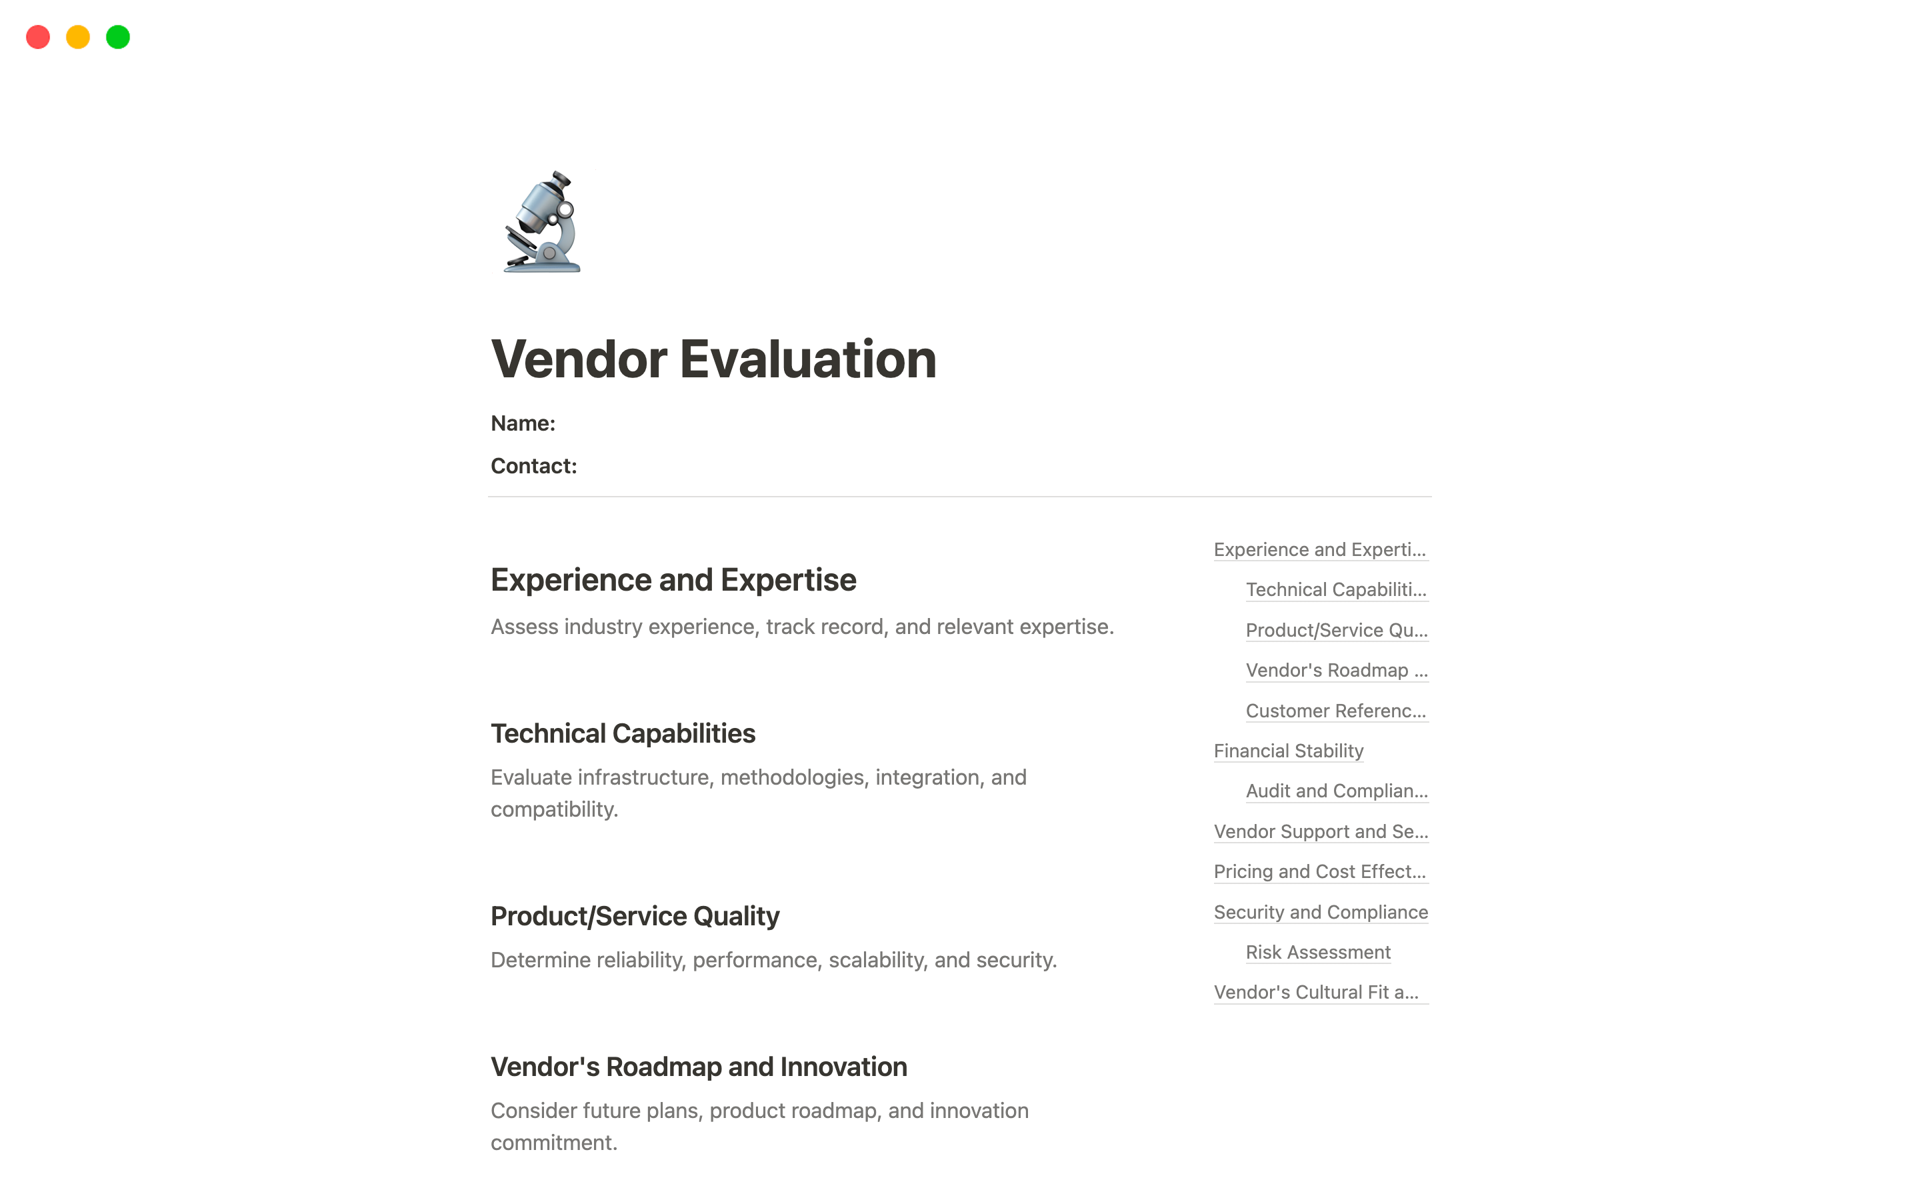 Make informed vendor selection decisions with our thorough Vendor Evaluation template.